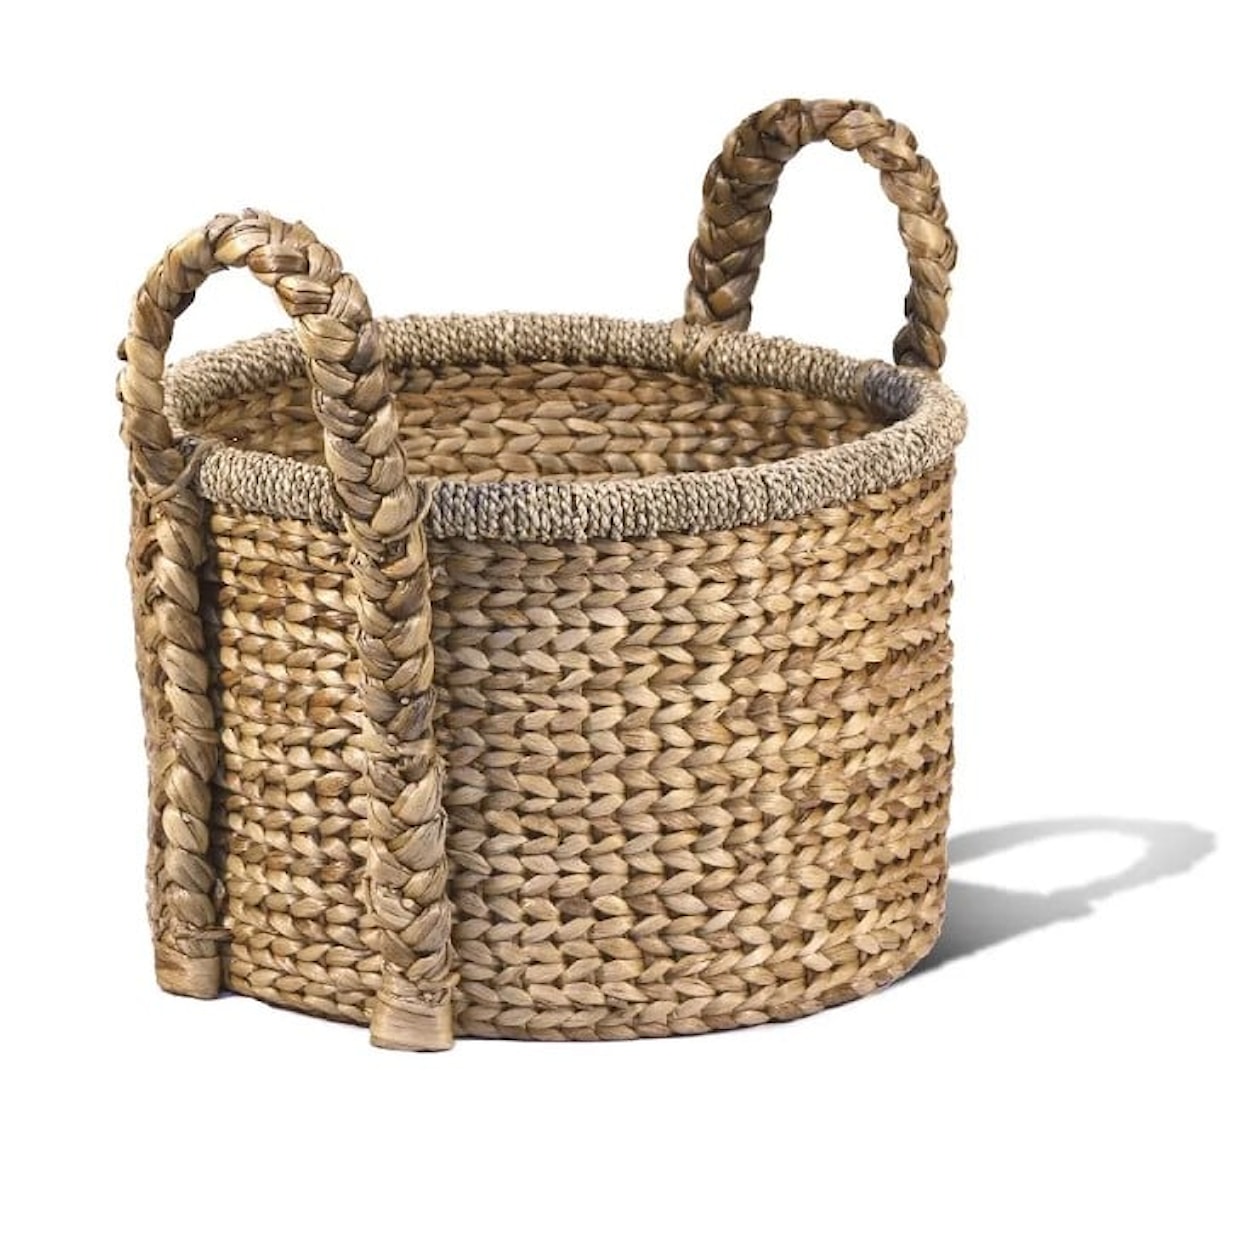 Ibolili Baskets and Sets WOVEN WATER HYACINTH BASKET, ROUND